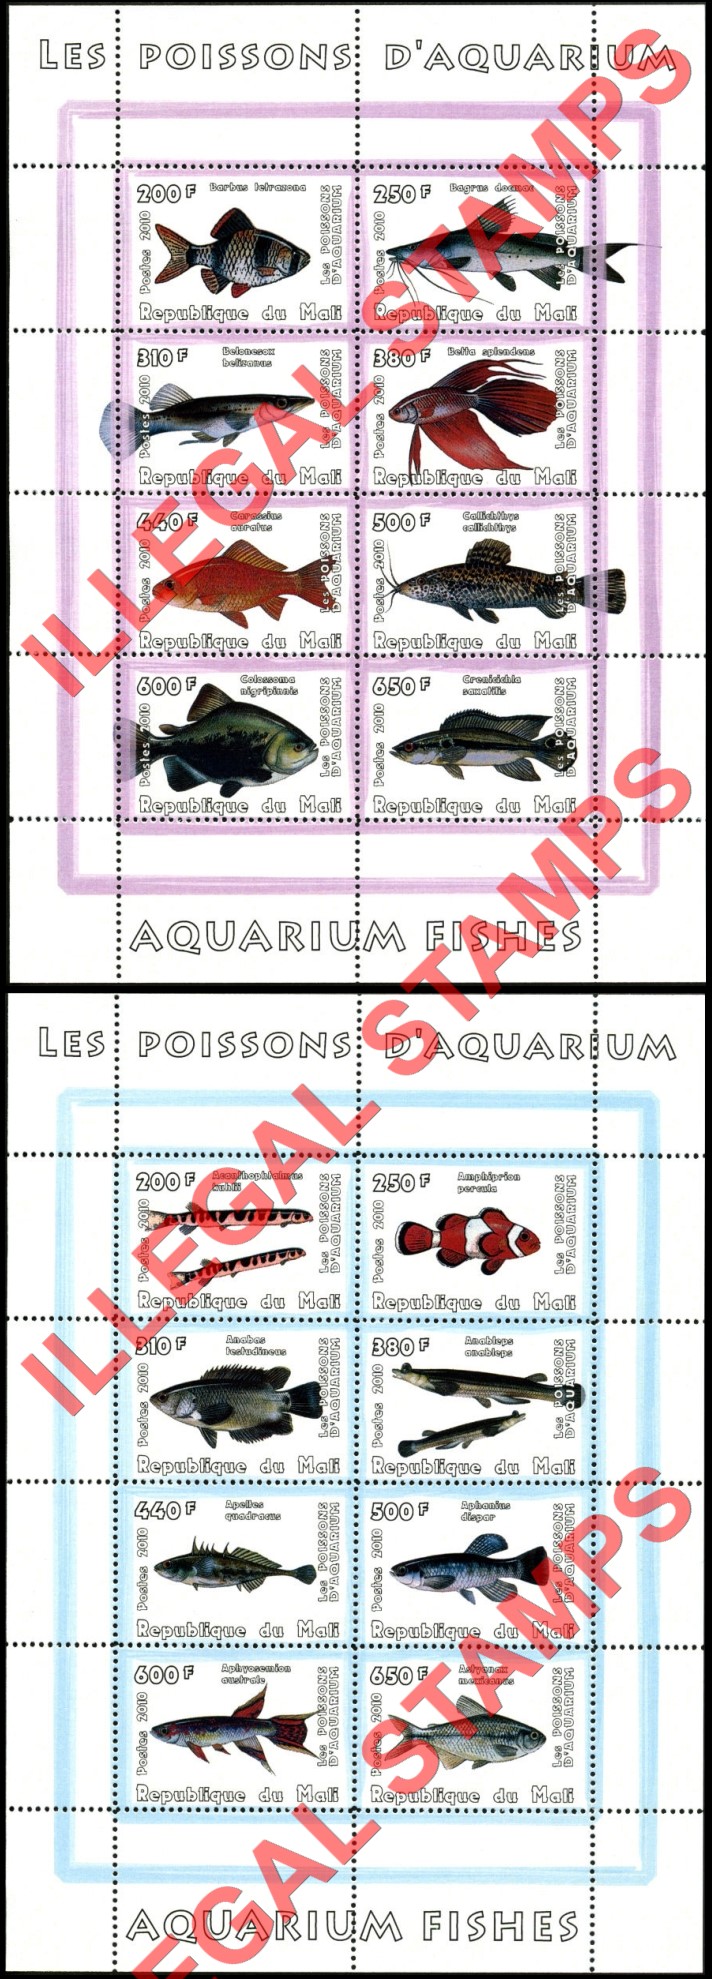 Mali 2010 Fish Aquarium Illegal Stamp Sheetlets of 8 (Part 1)